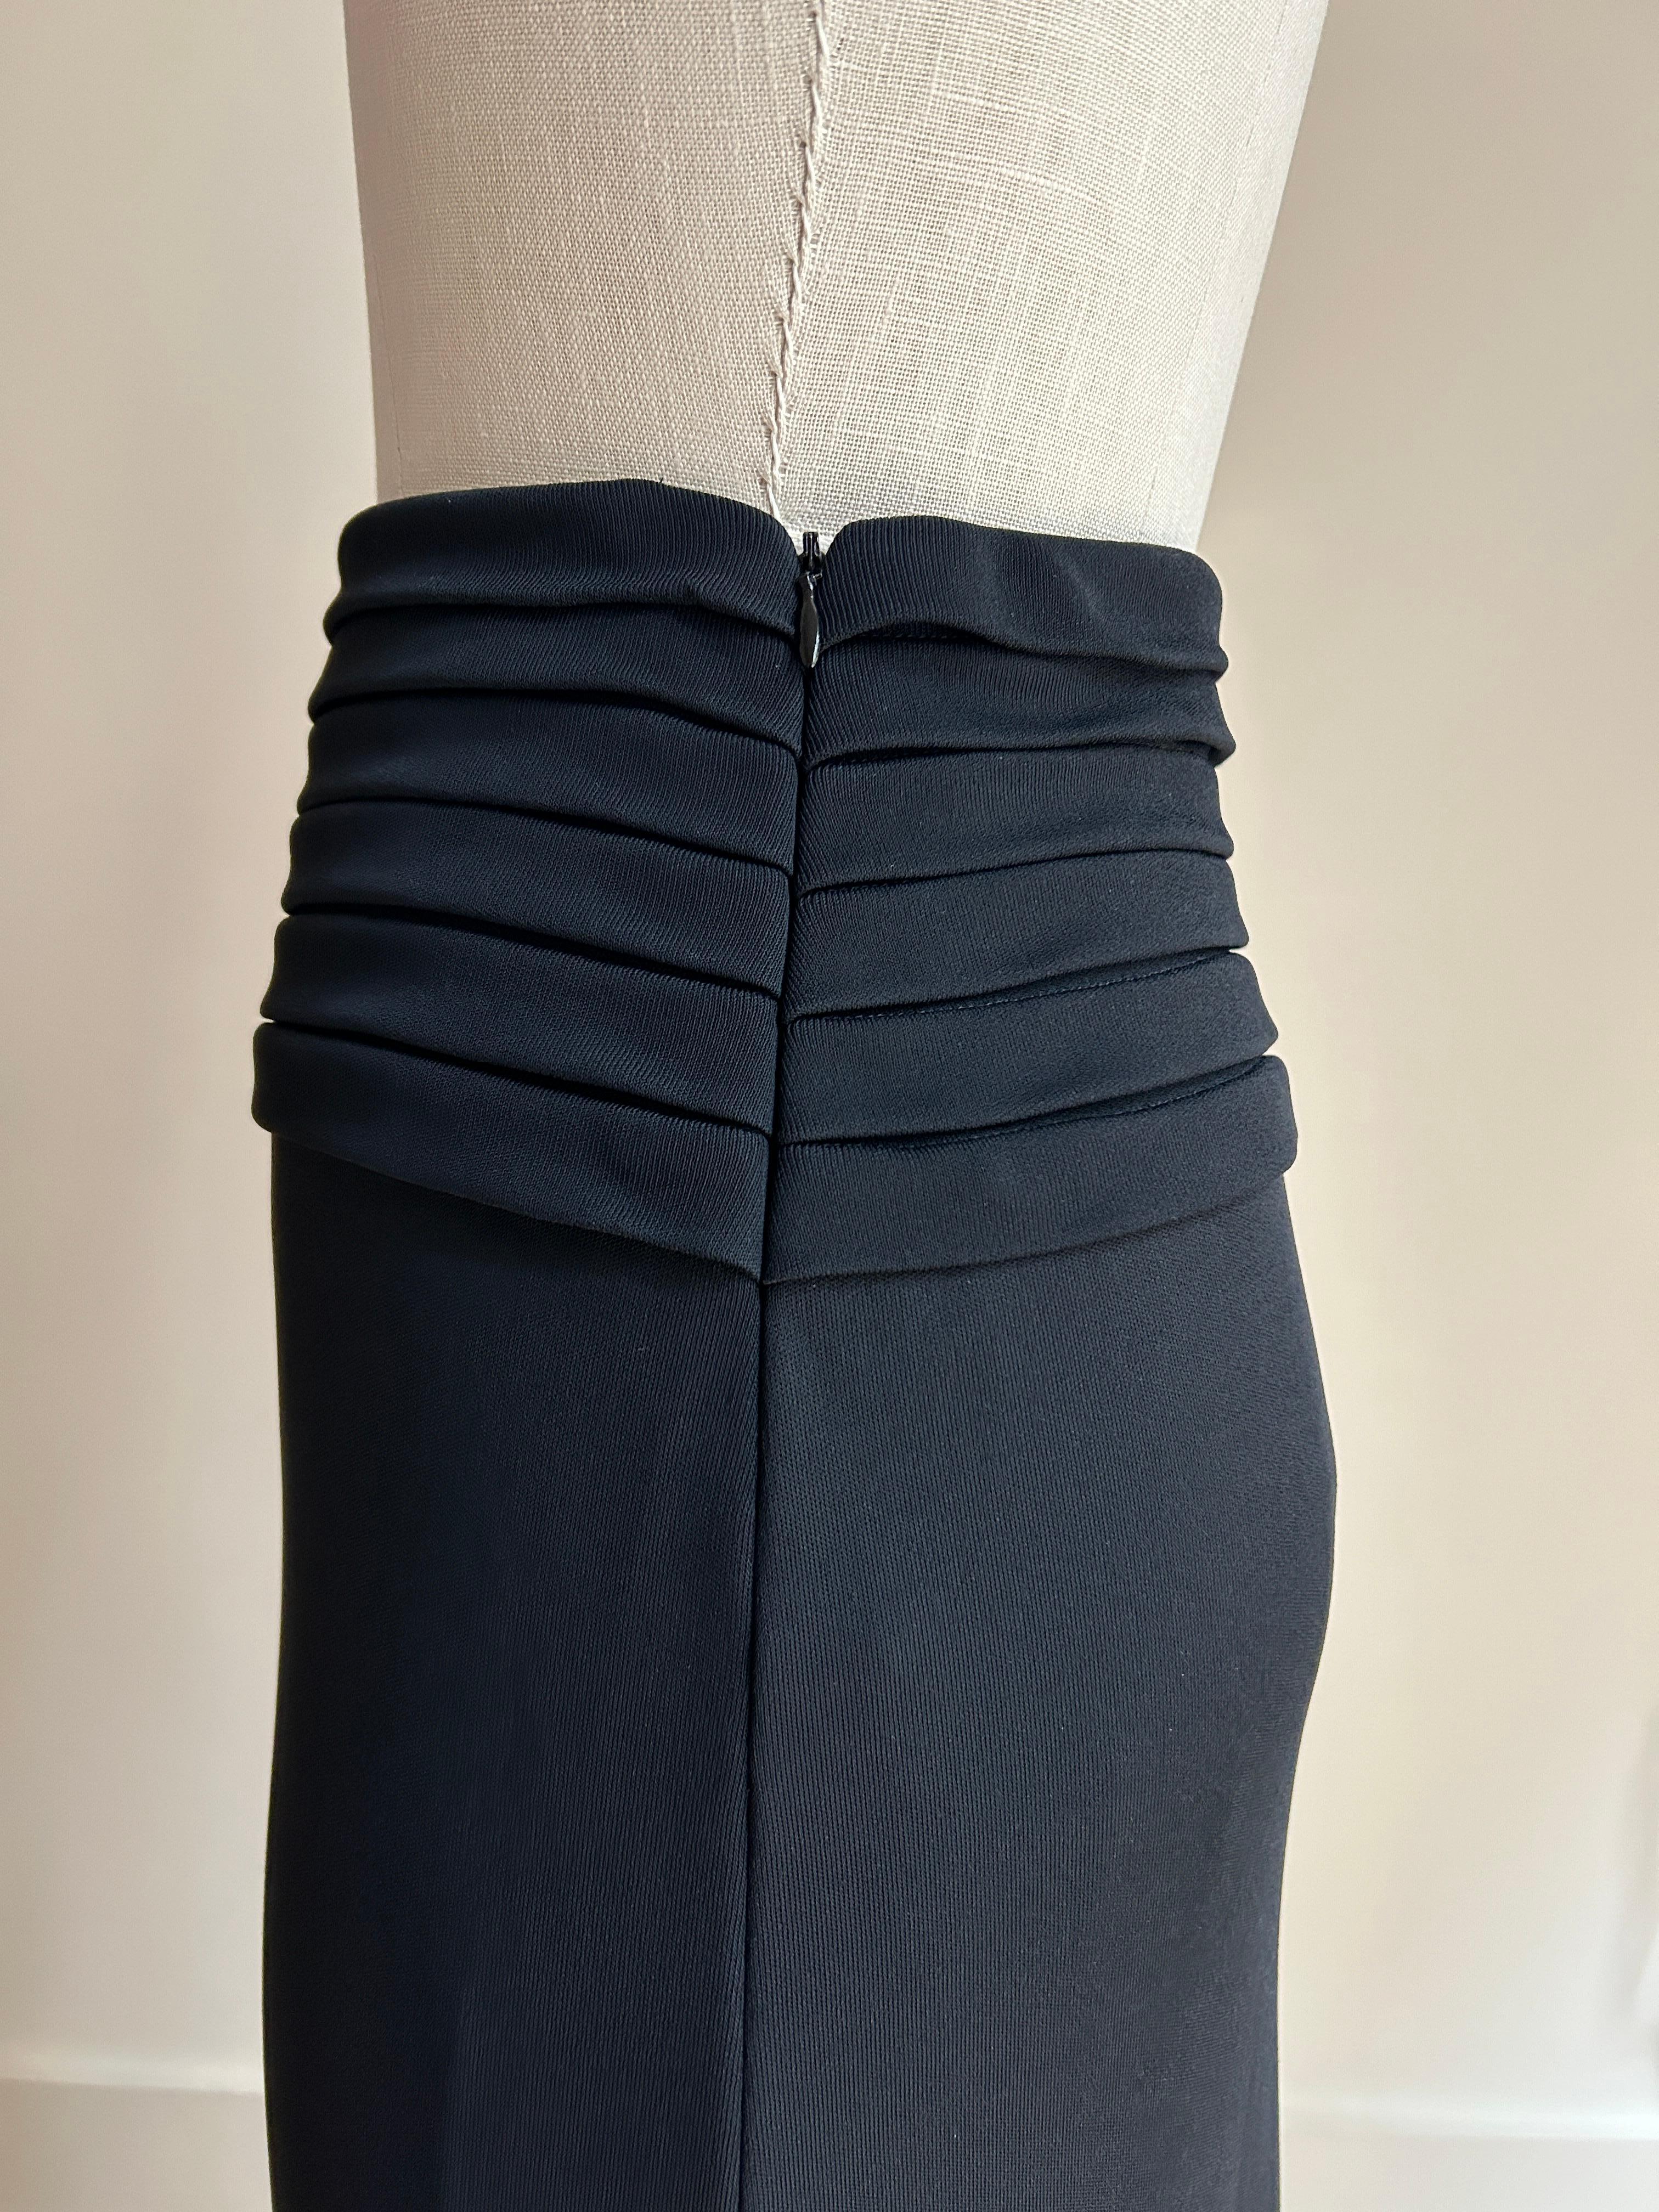 Giorgio Armani Unworn 1990s Black Midi Skirt with Pleat Detail at Waist For Sale 2